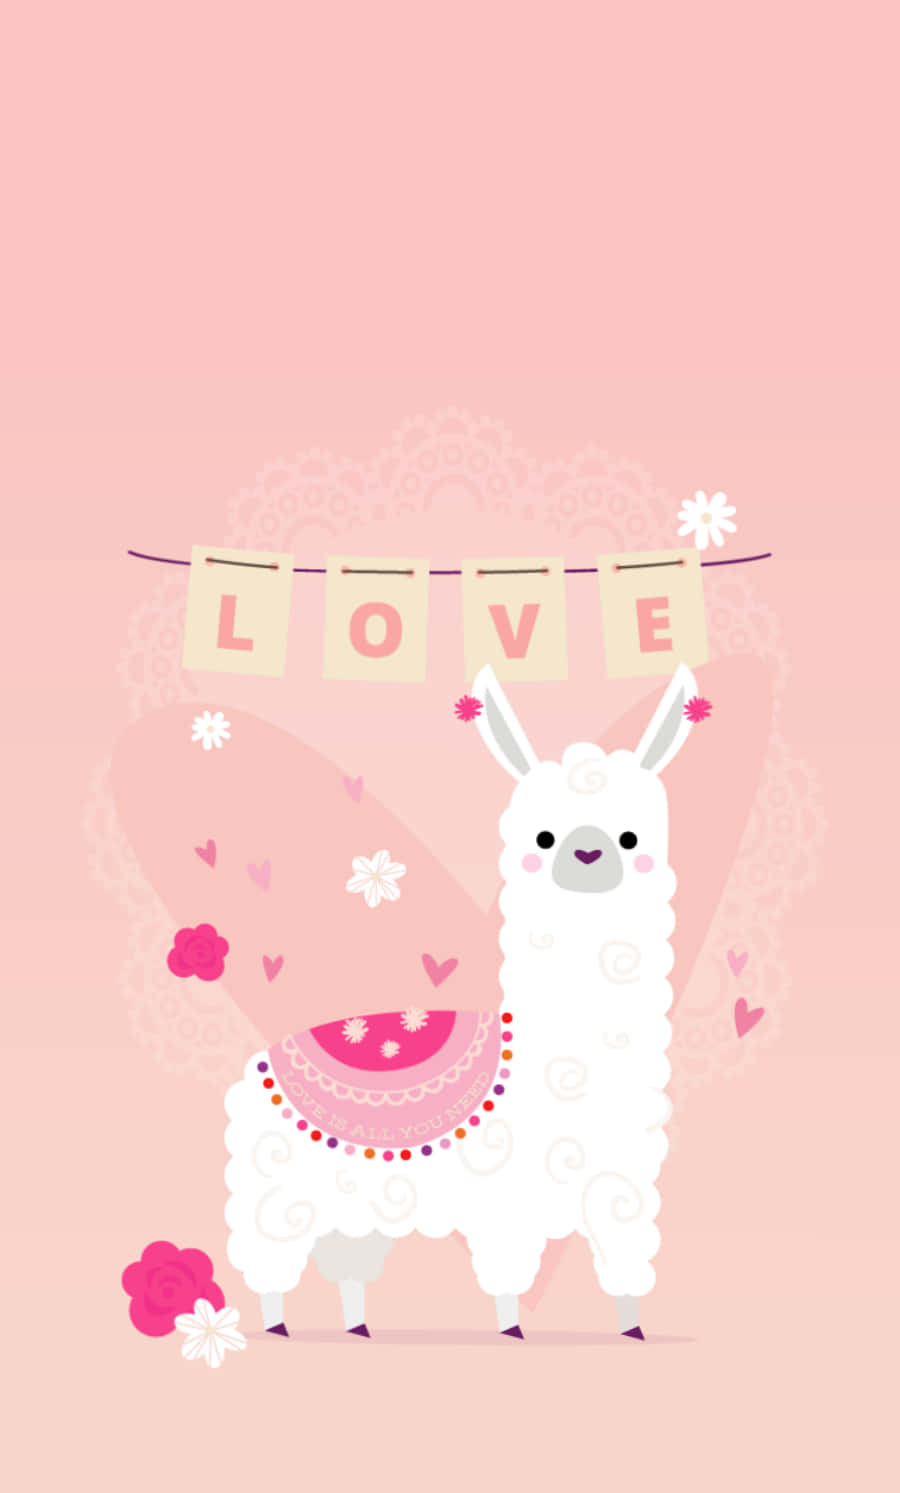 Download A Cute Llama With Love Written On It Wallpaper ...